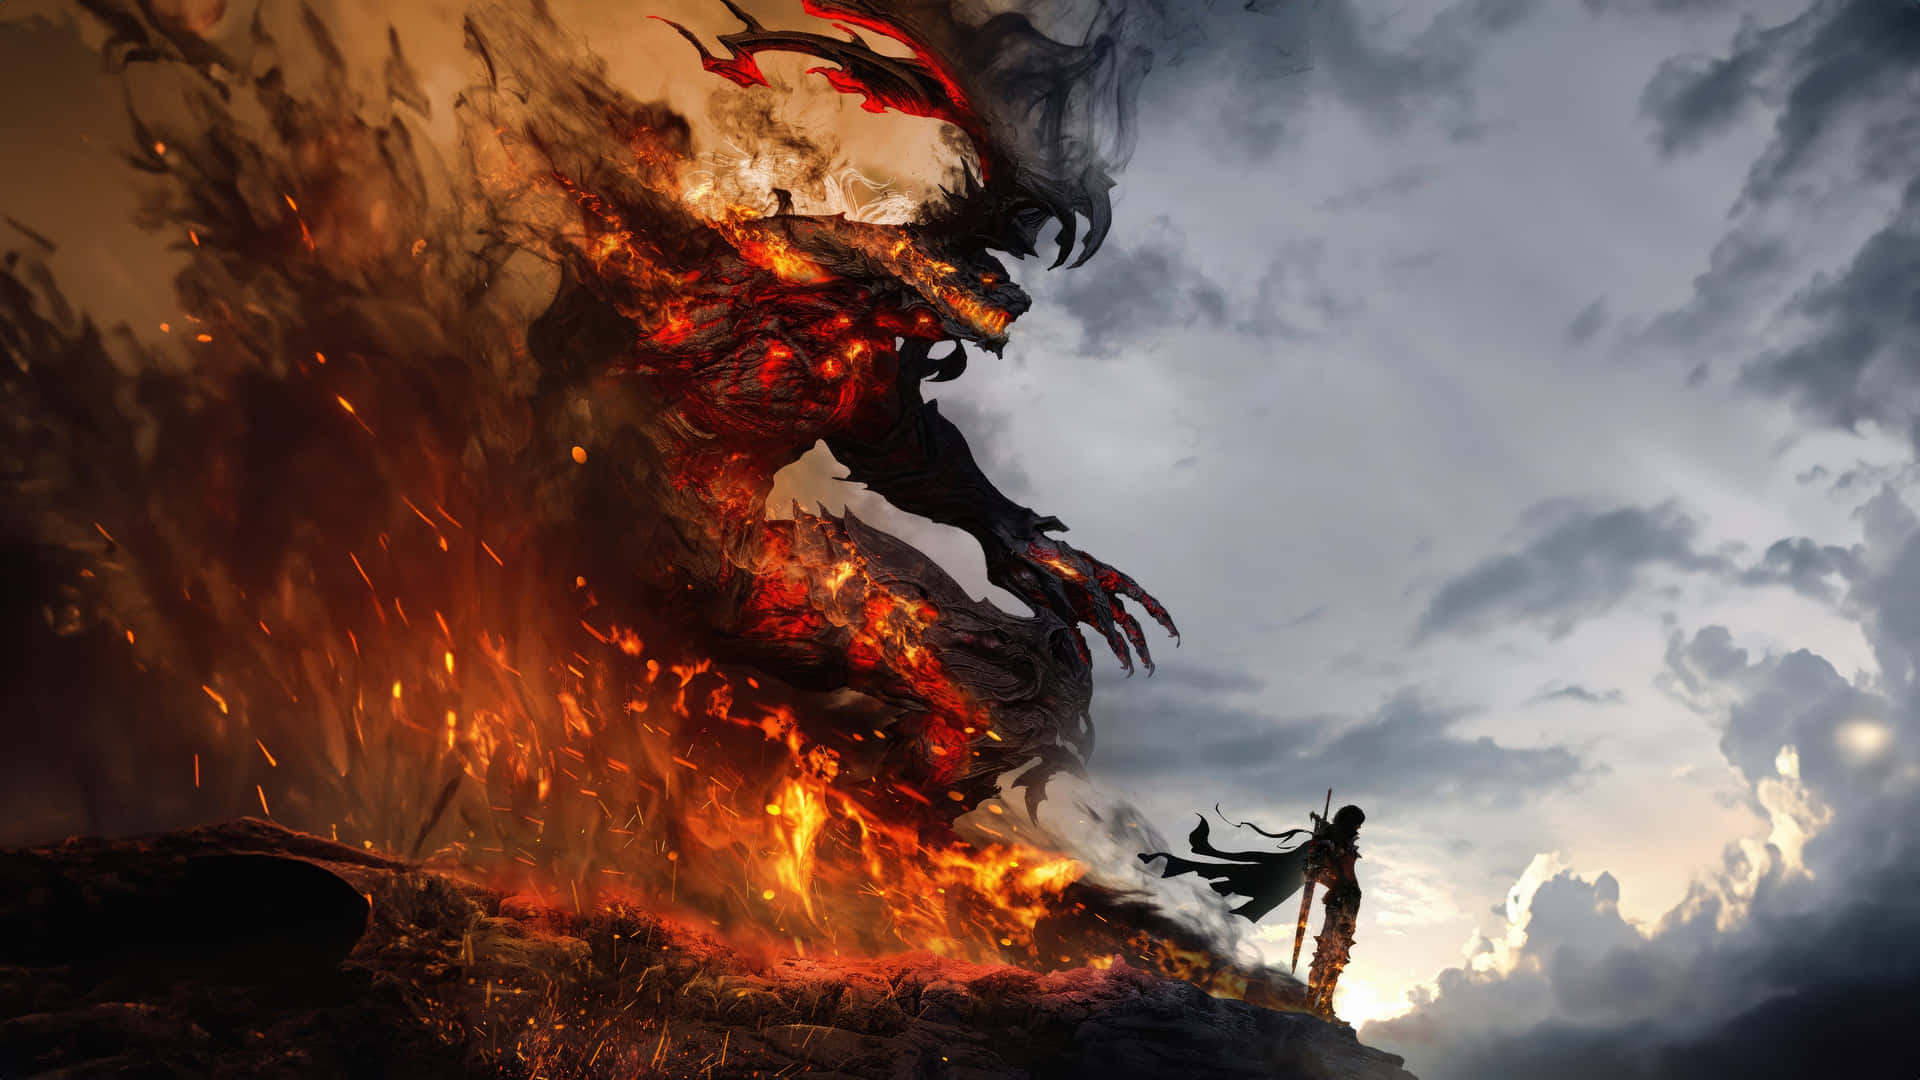 Final Fantasy X V I Epic Dragon Confrontation Wallpaper